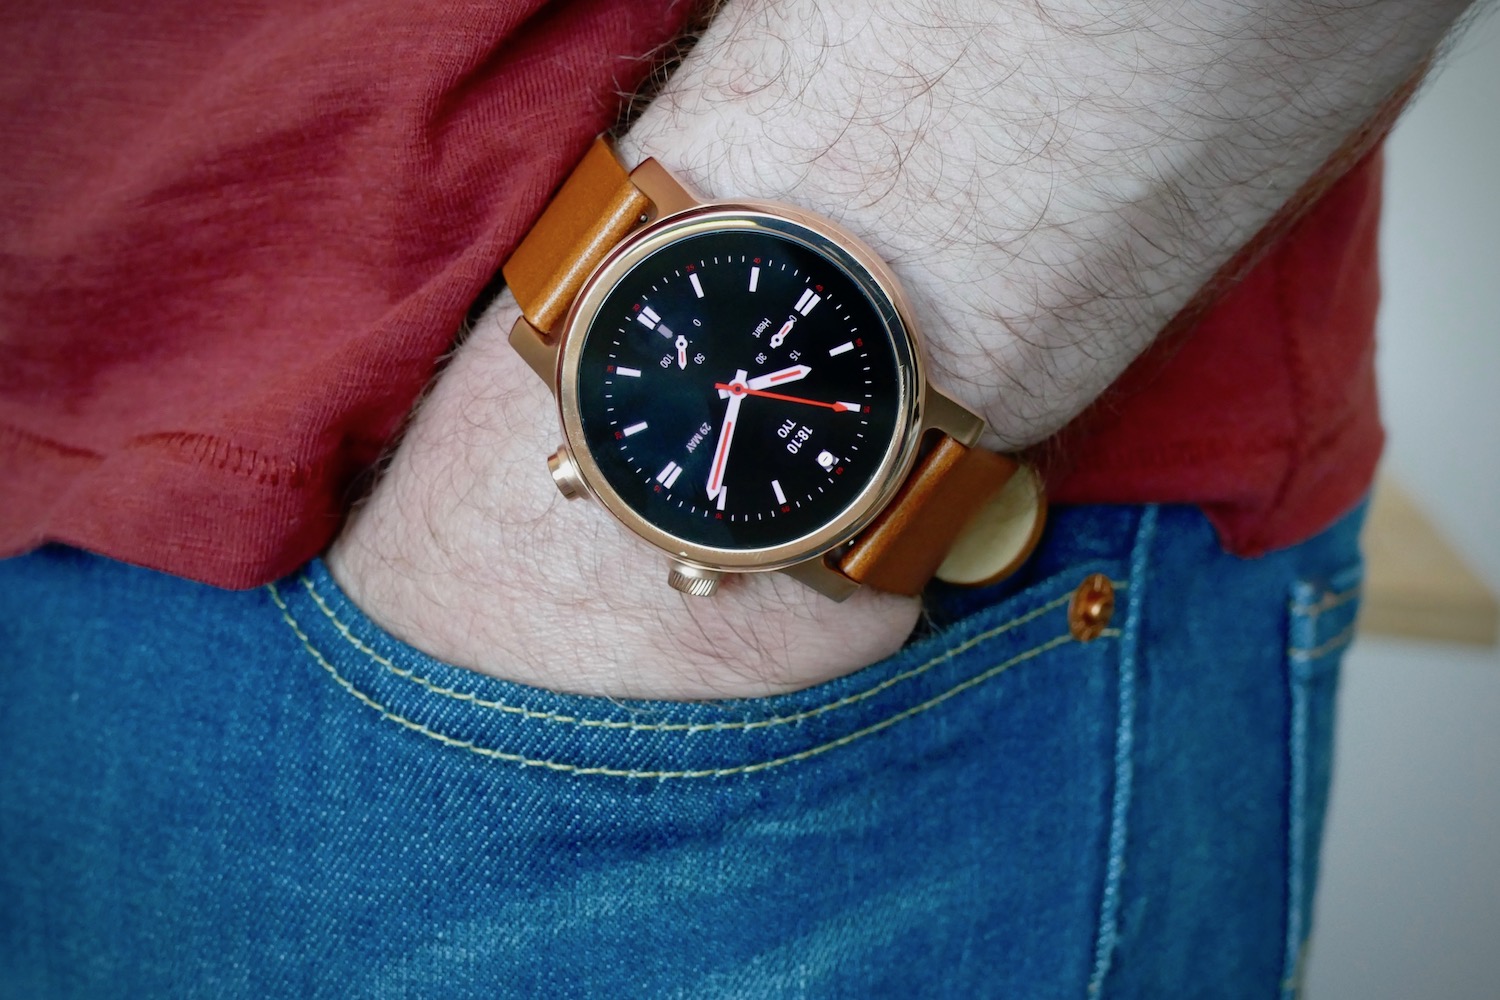 Moto 360 Smartwatch Review: A Classic, Reimagined | Digital Trends